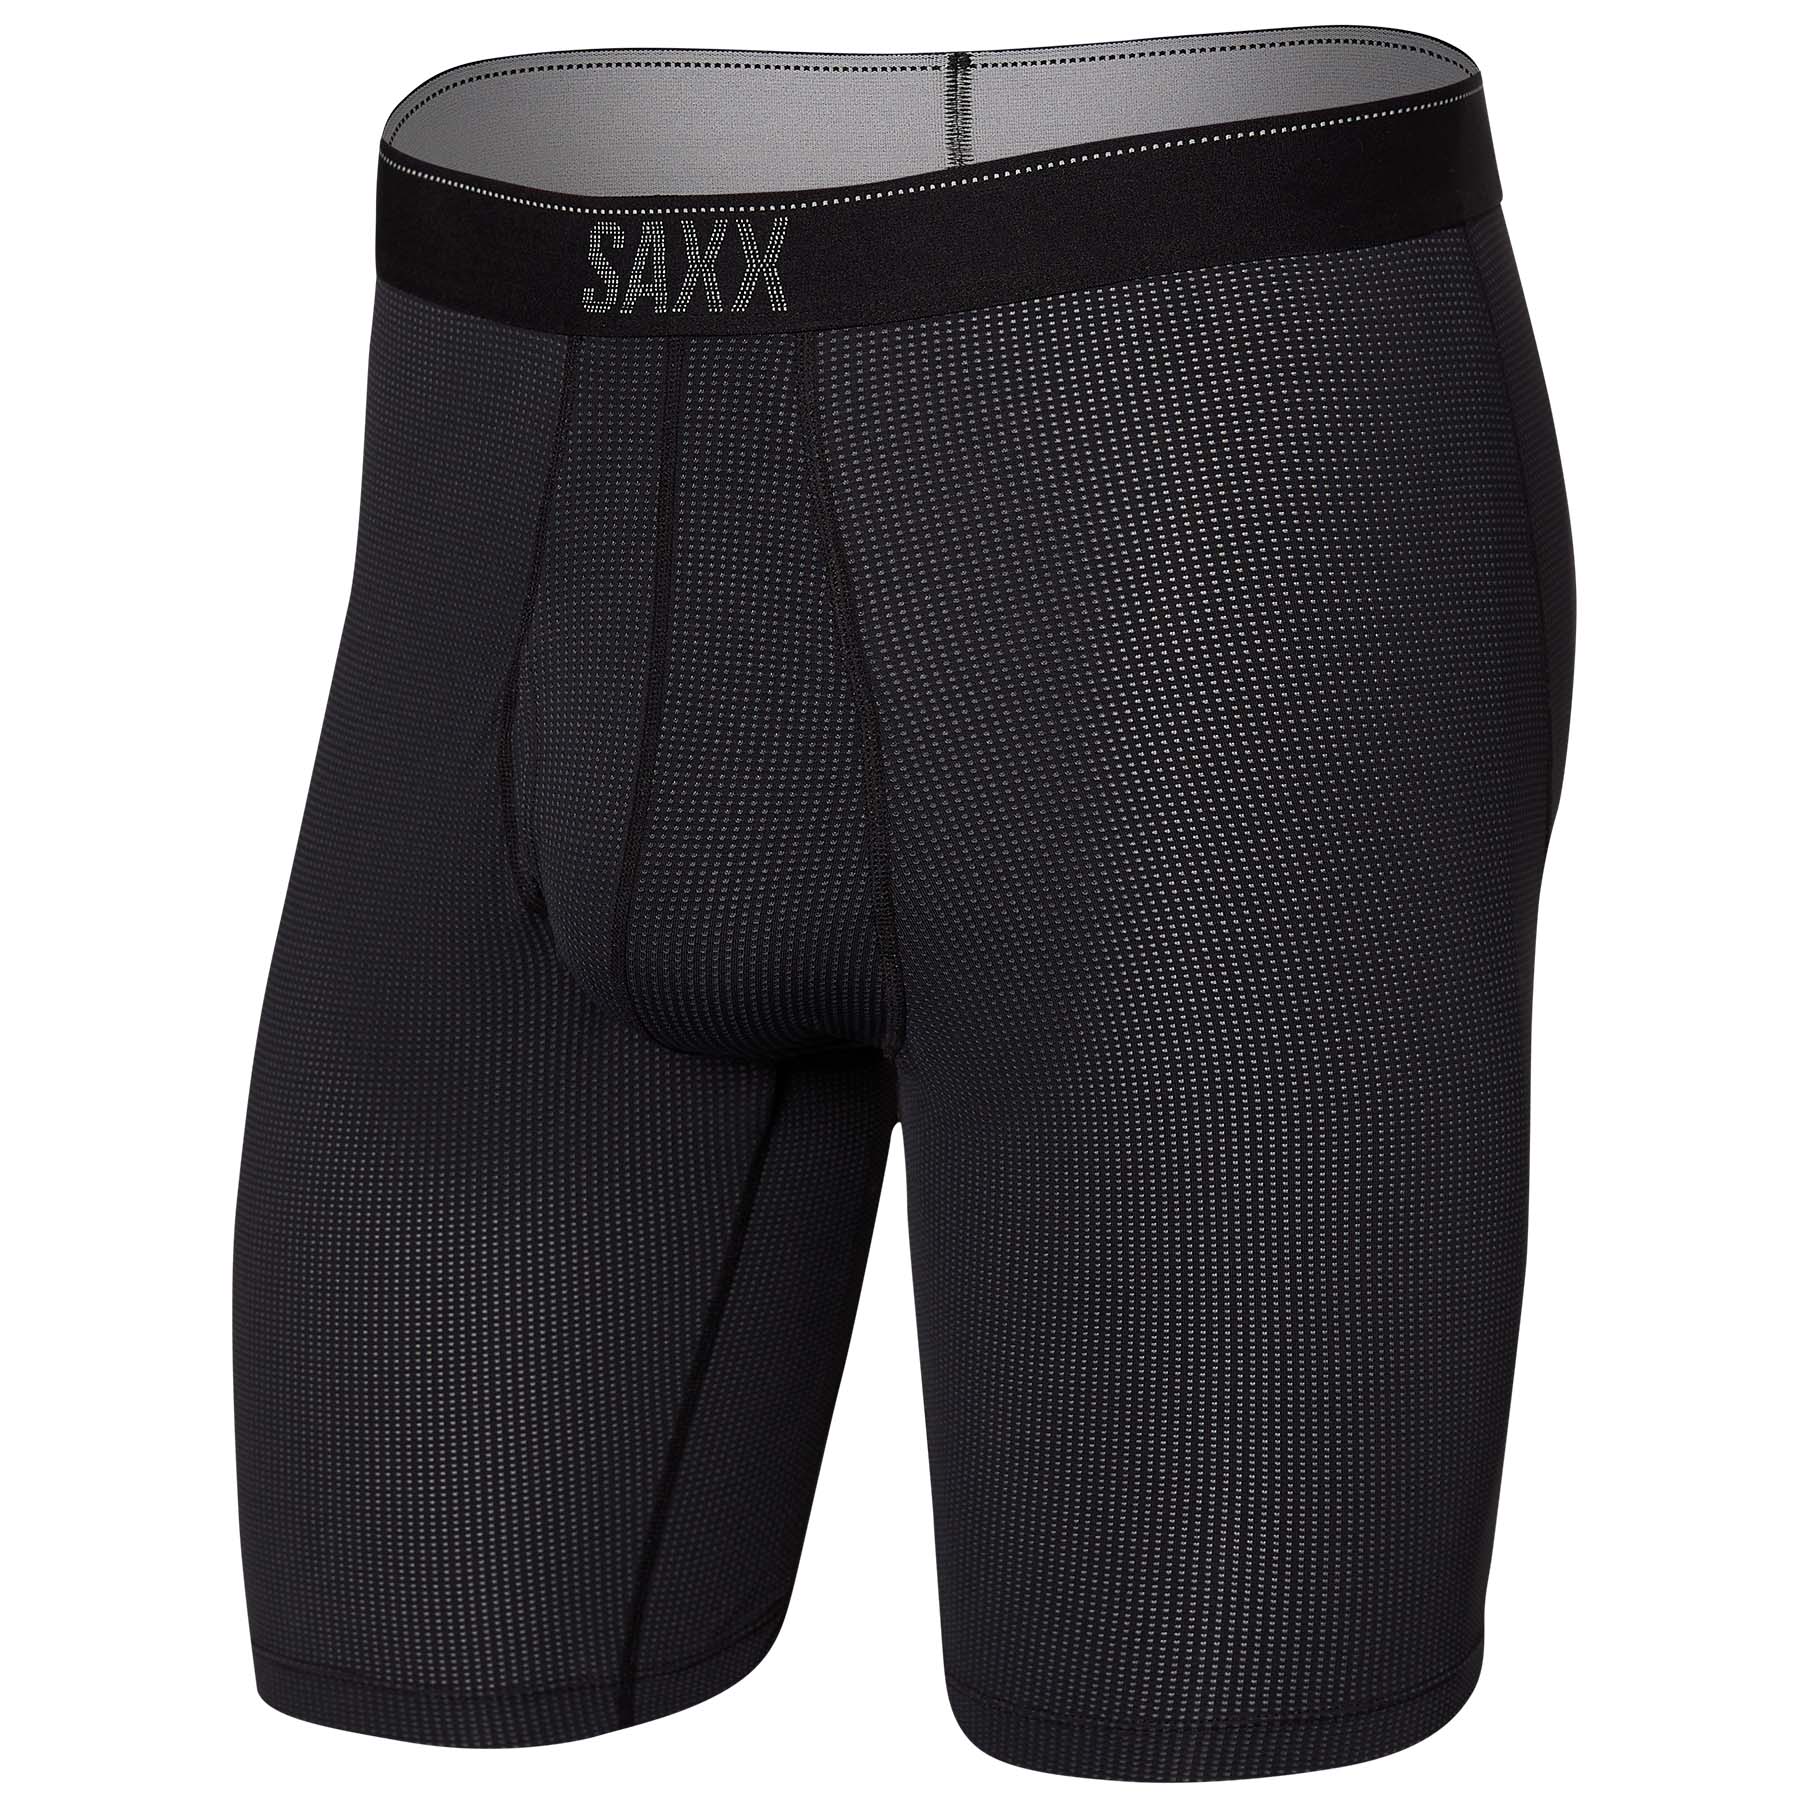 Saxx Quest Long Leg Boxer Brief Men's Underwear